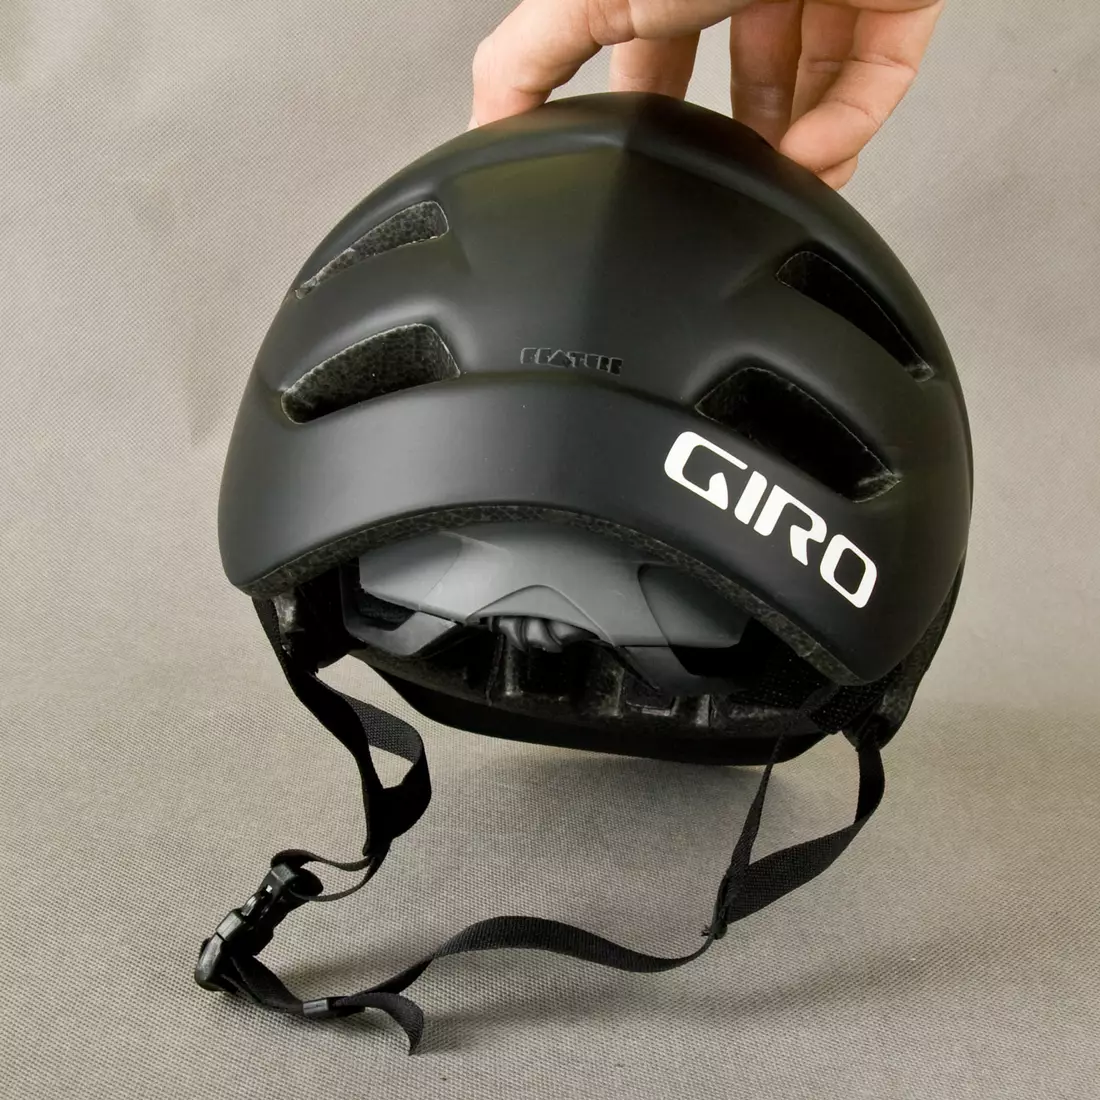 GIRO kask rowerowy FEATURE black mat